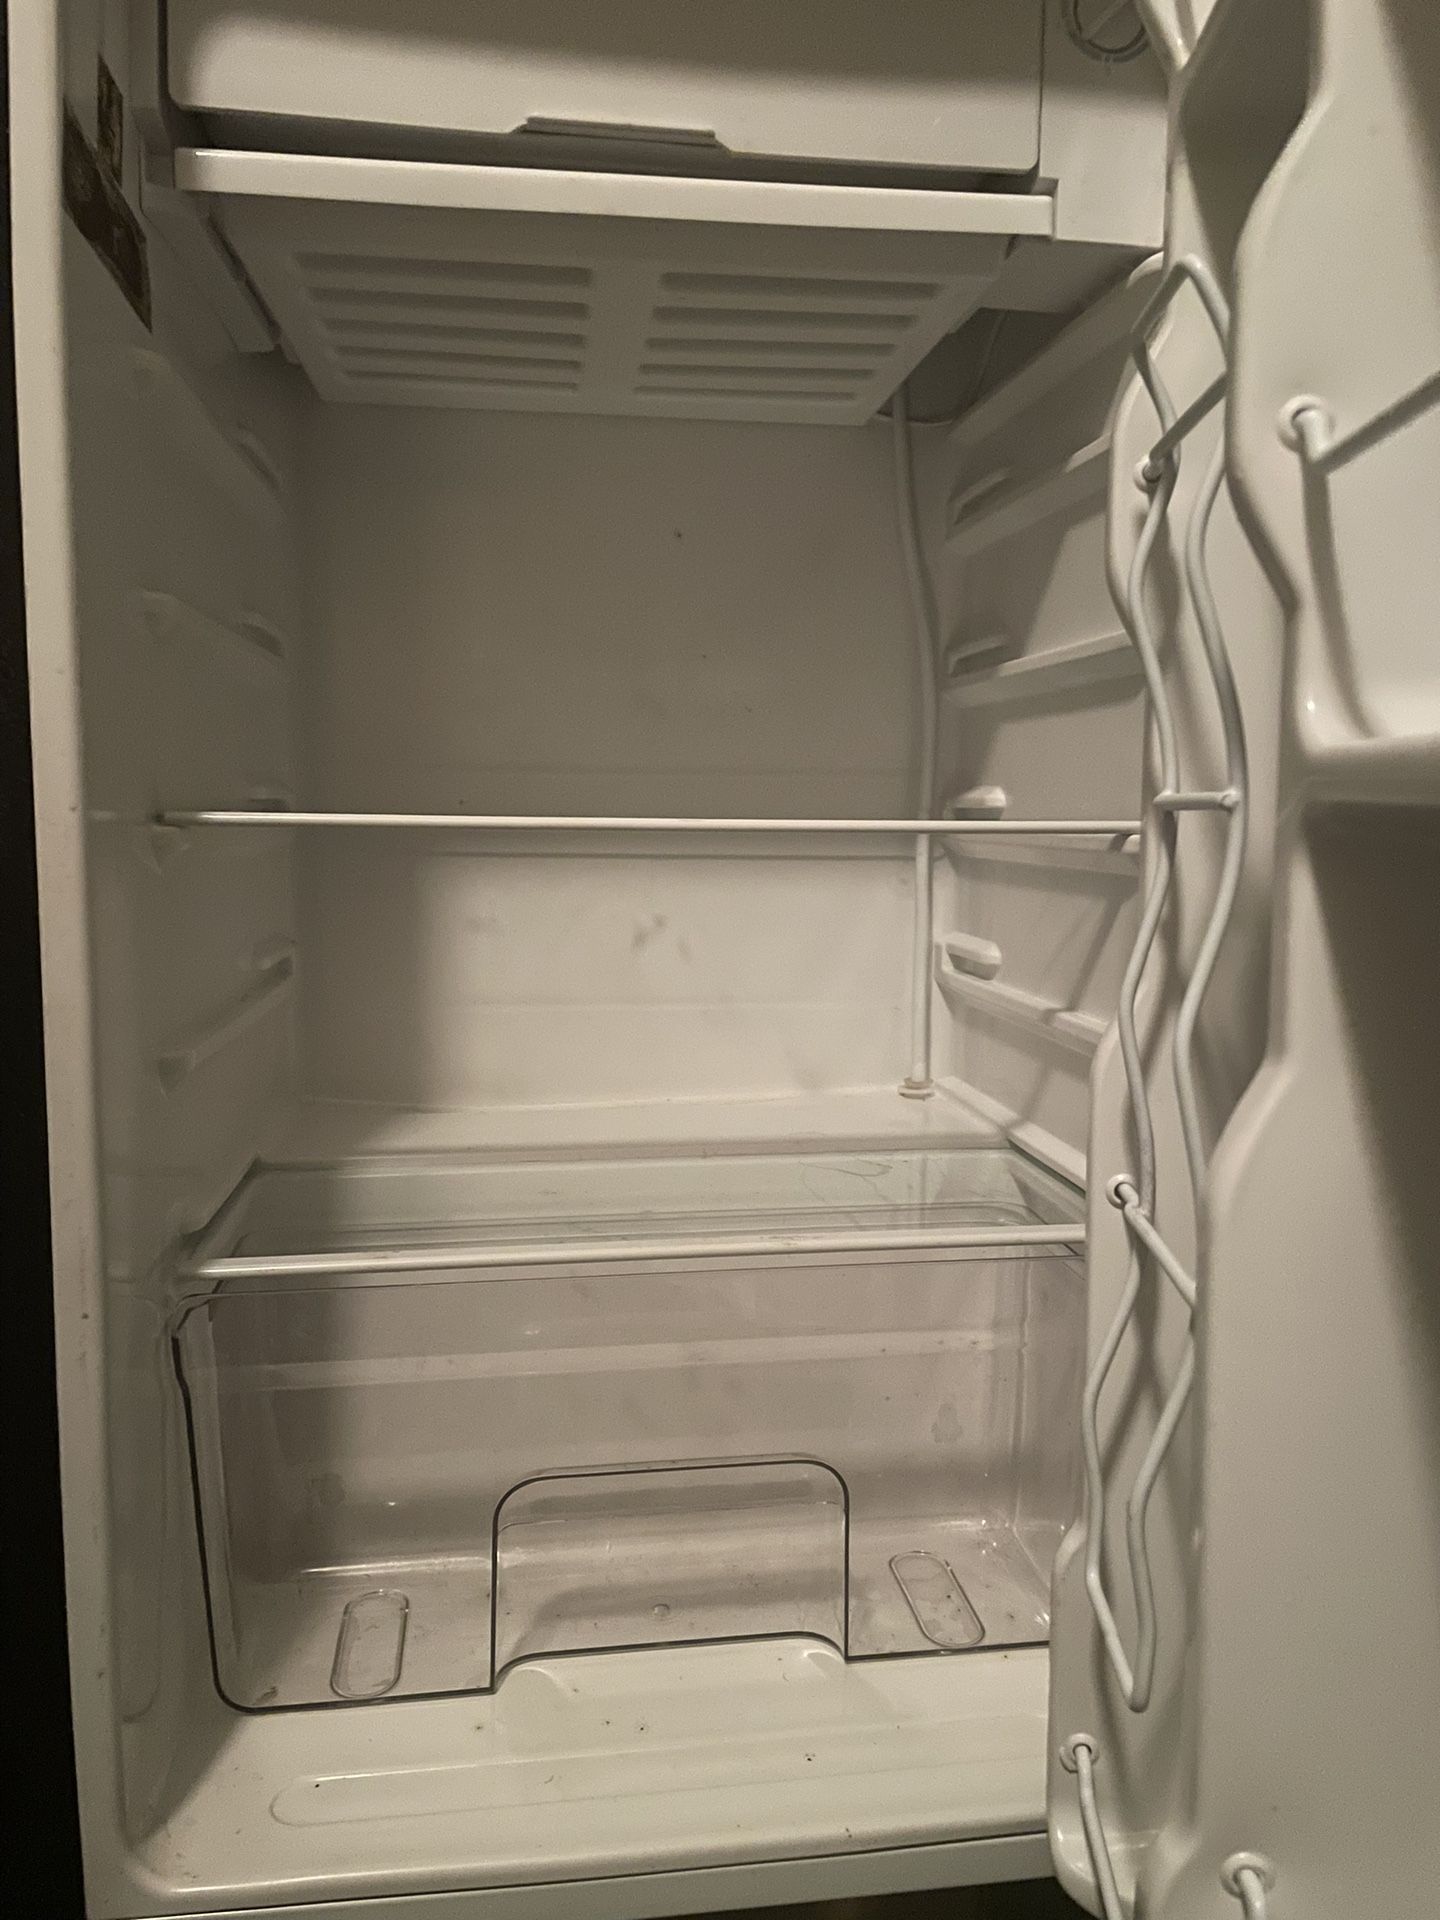 Tack Lift Medium Size Refrigerator